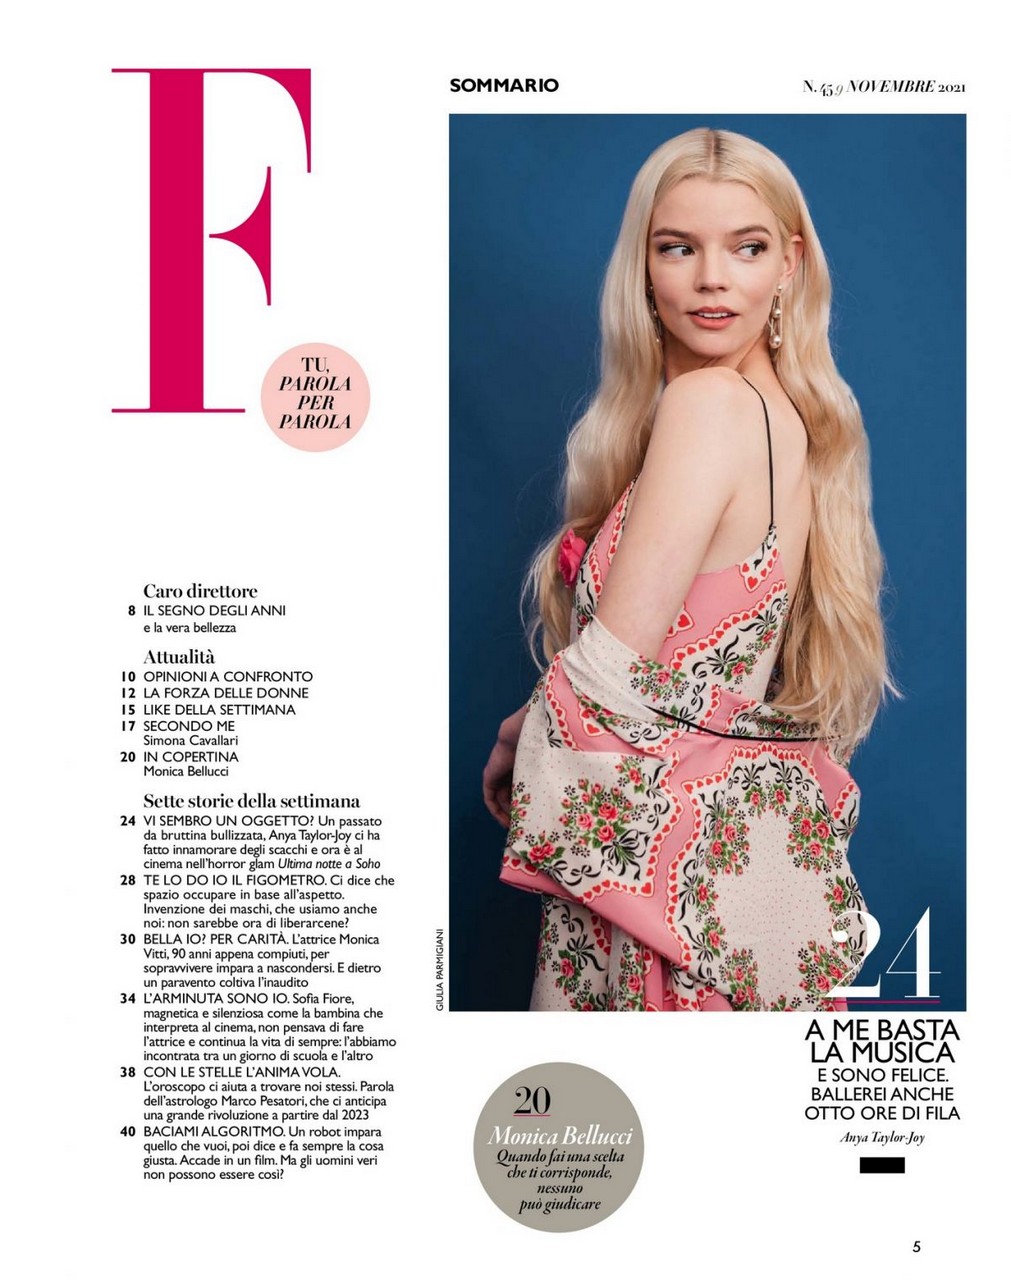 Anta Taylor Joy F Magazine November